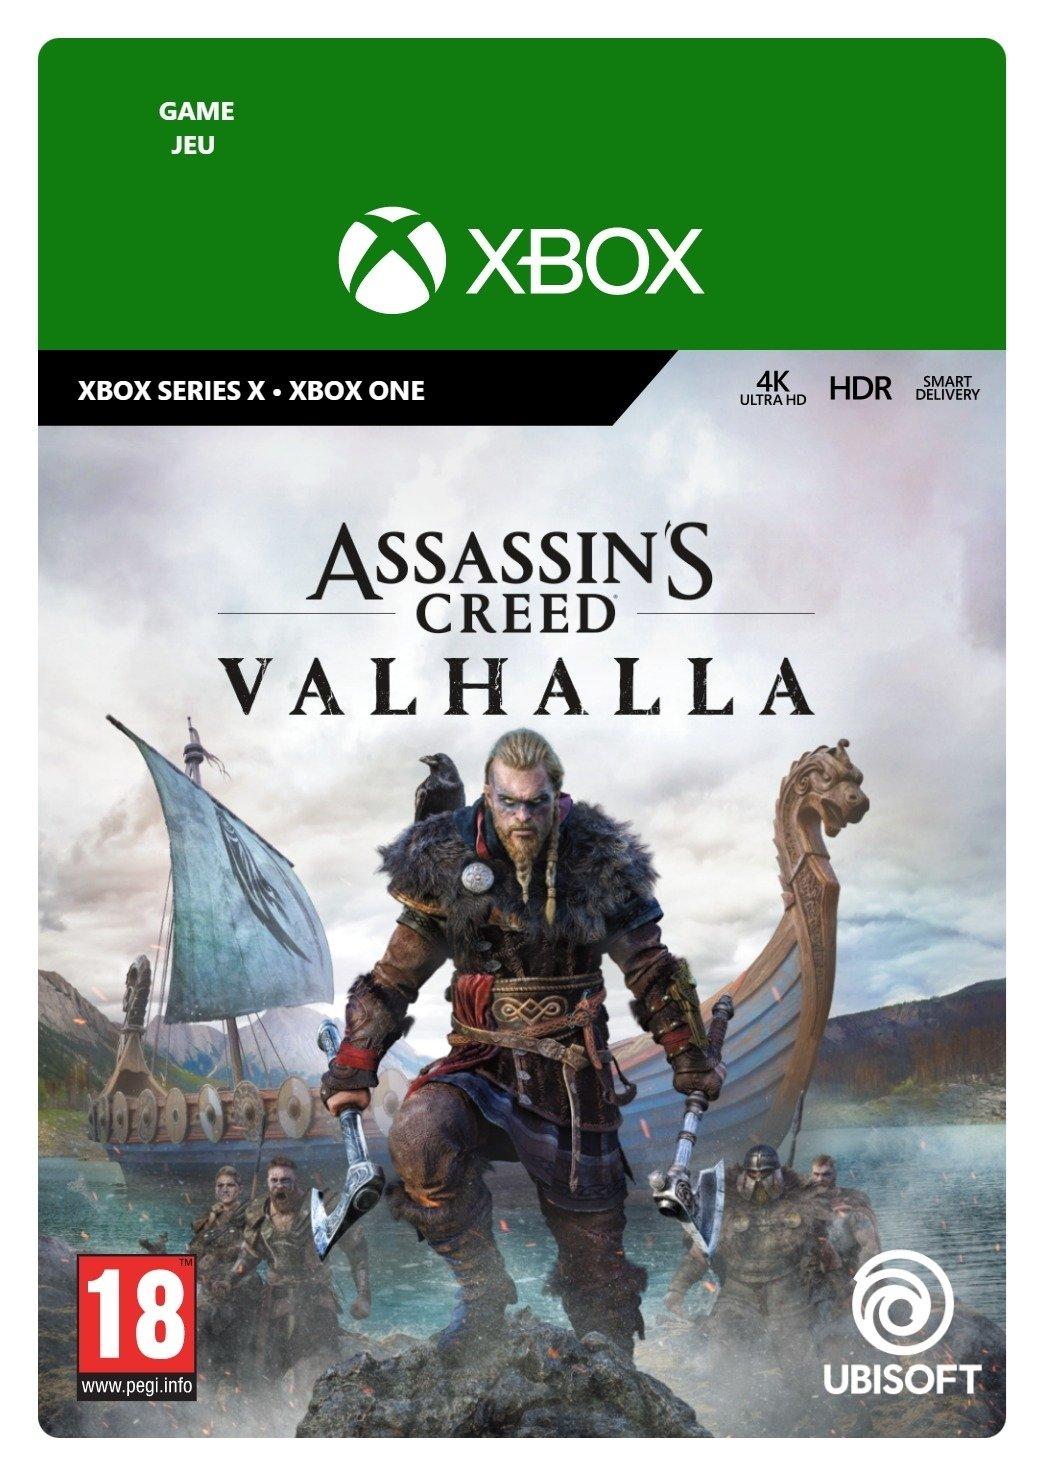 Assassin's Creed Valhalla Standard Edition - Xbox Series X/Xbox One - Game | G3Q-00925 (d31bf208-b7a8-c247-9ddc-2e43192d96b6)